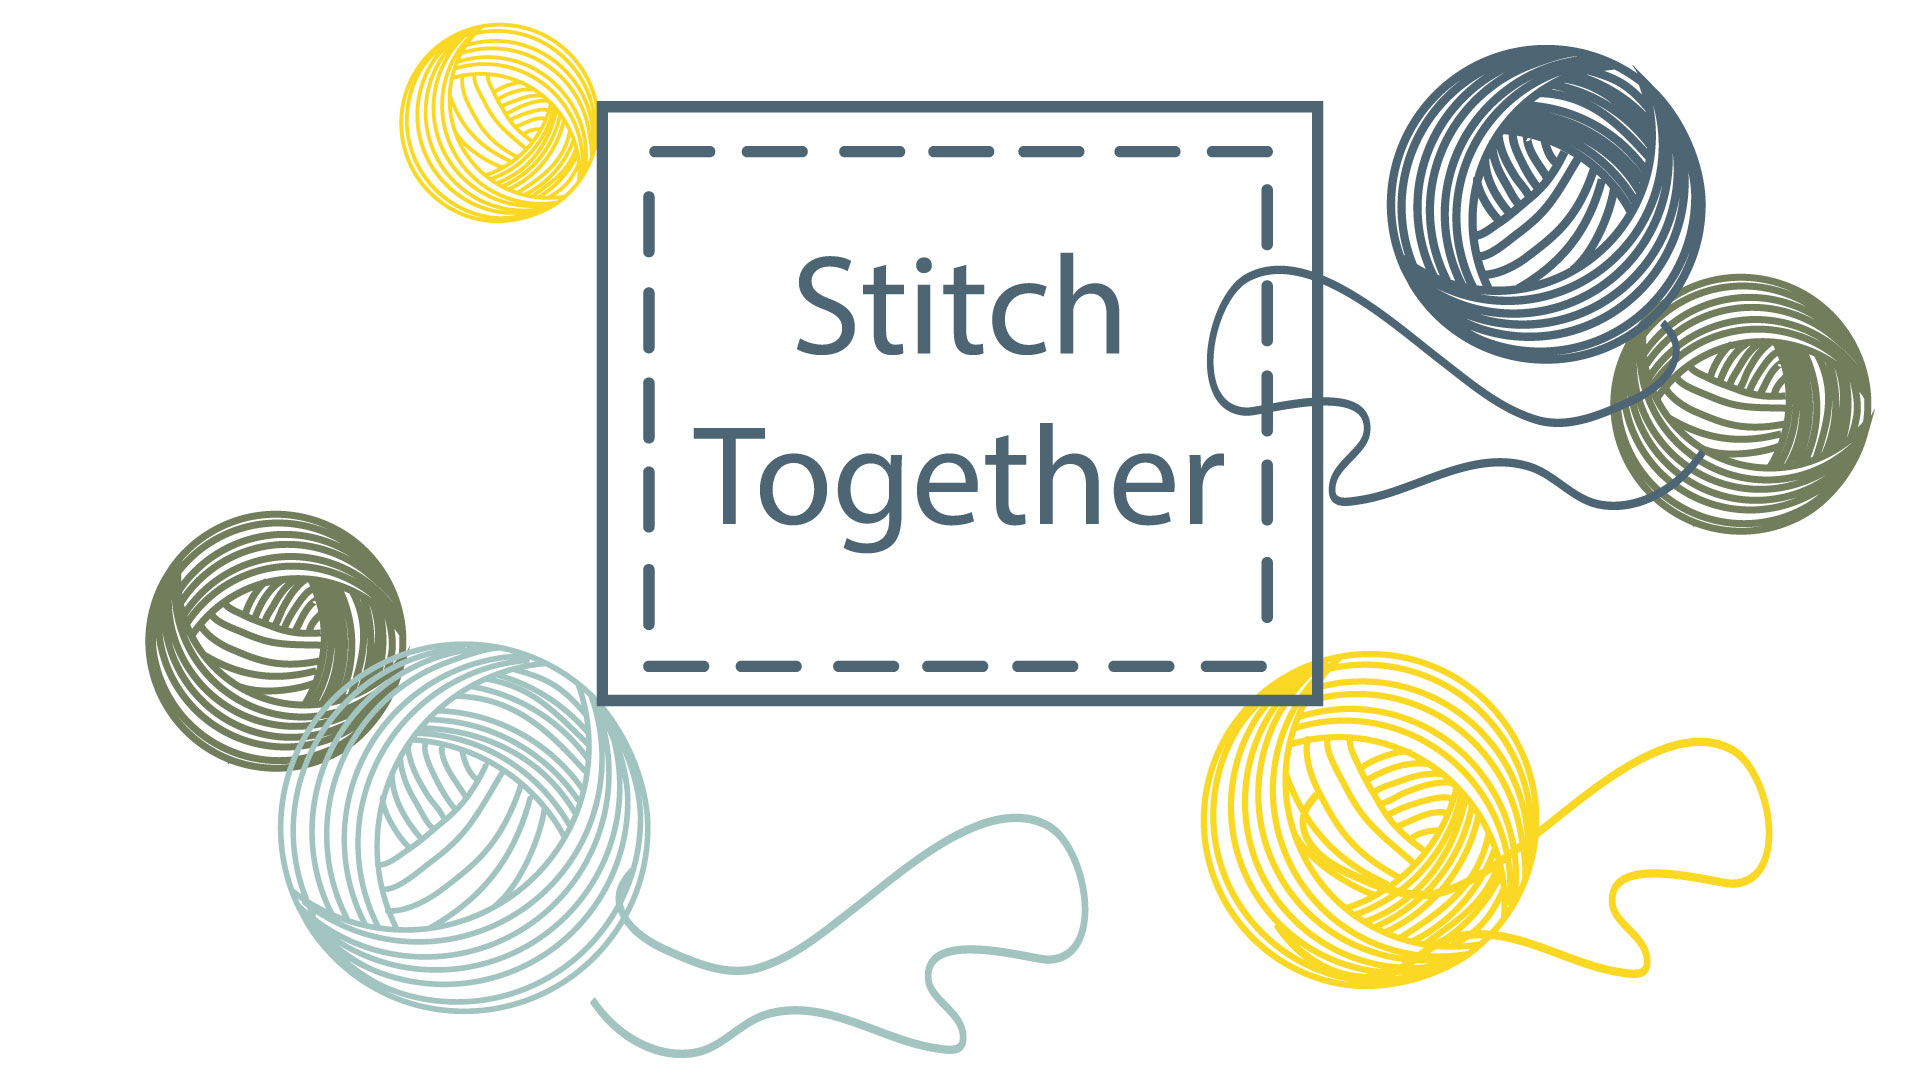 Stitch Together on Zoom